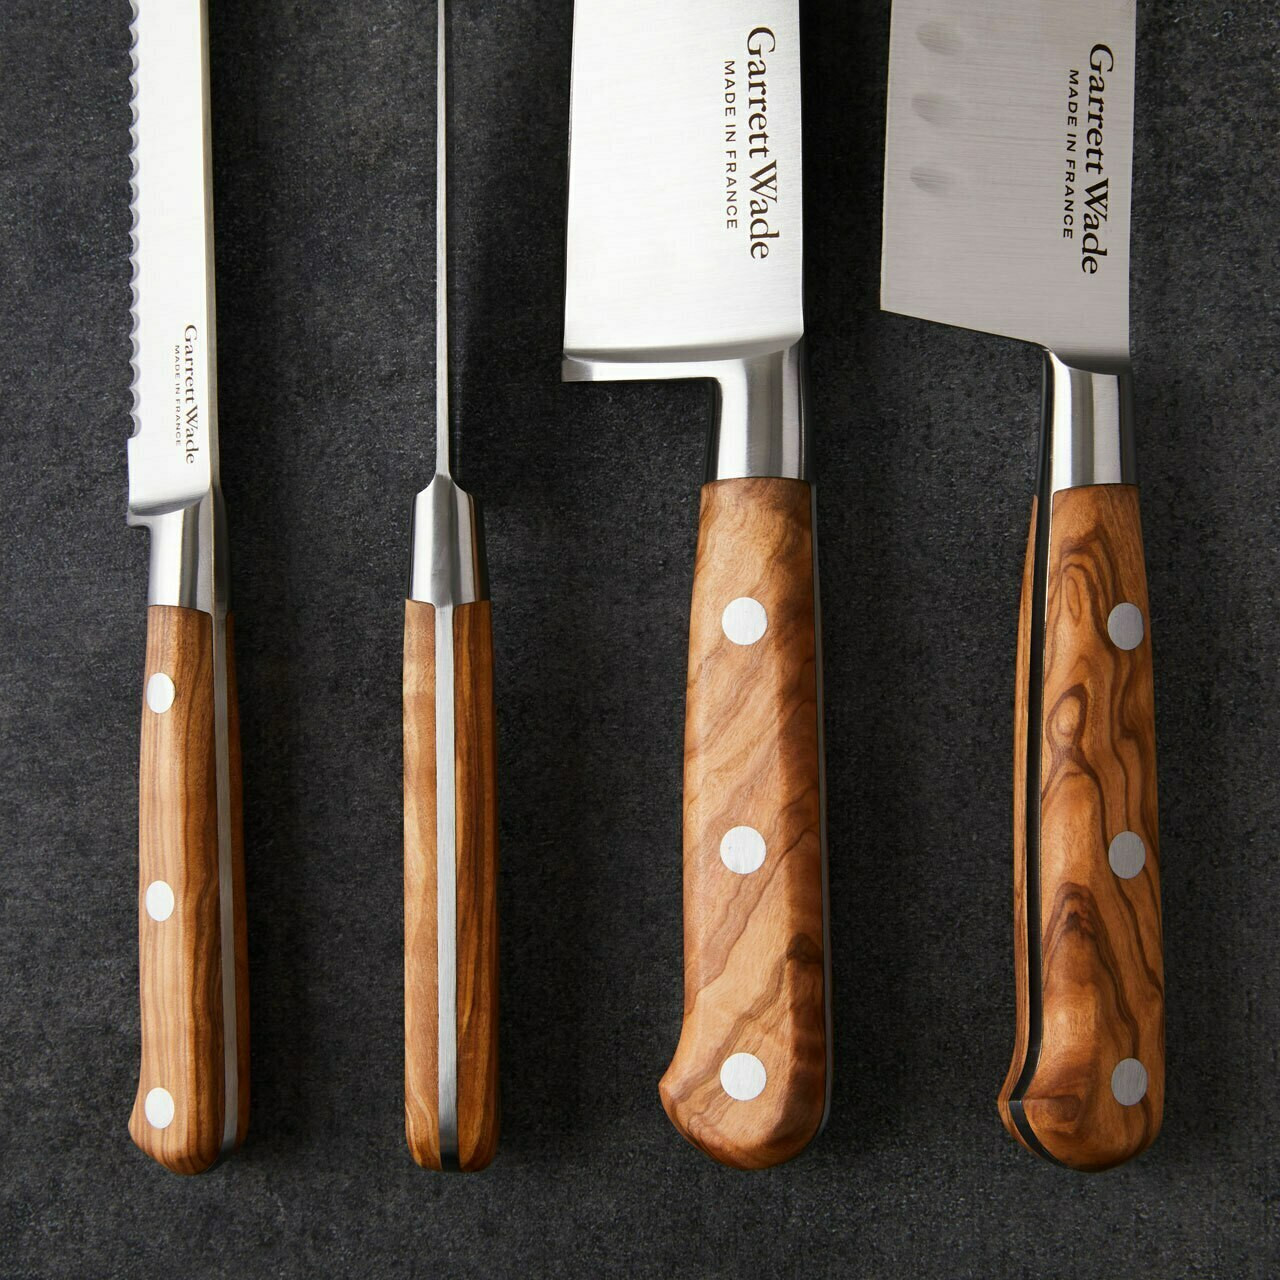 Gift Box - 6 Pieces Elegance : professional kitchen knives set - Sabatier K